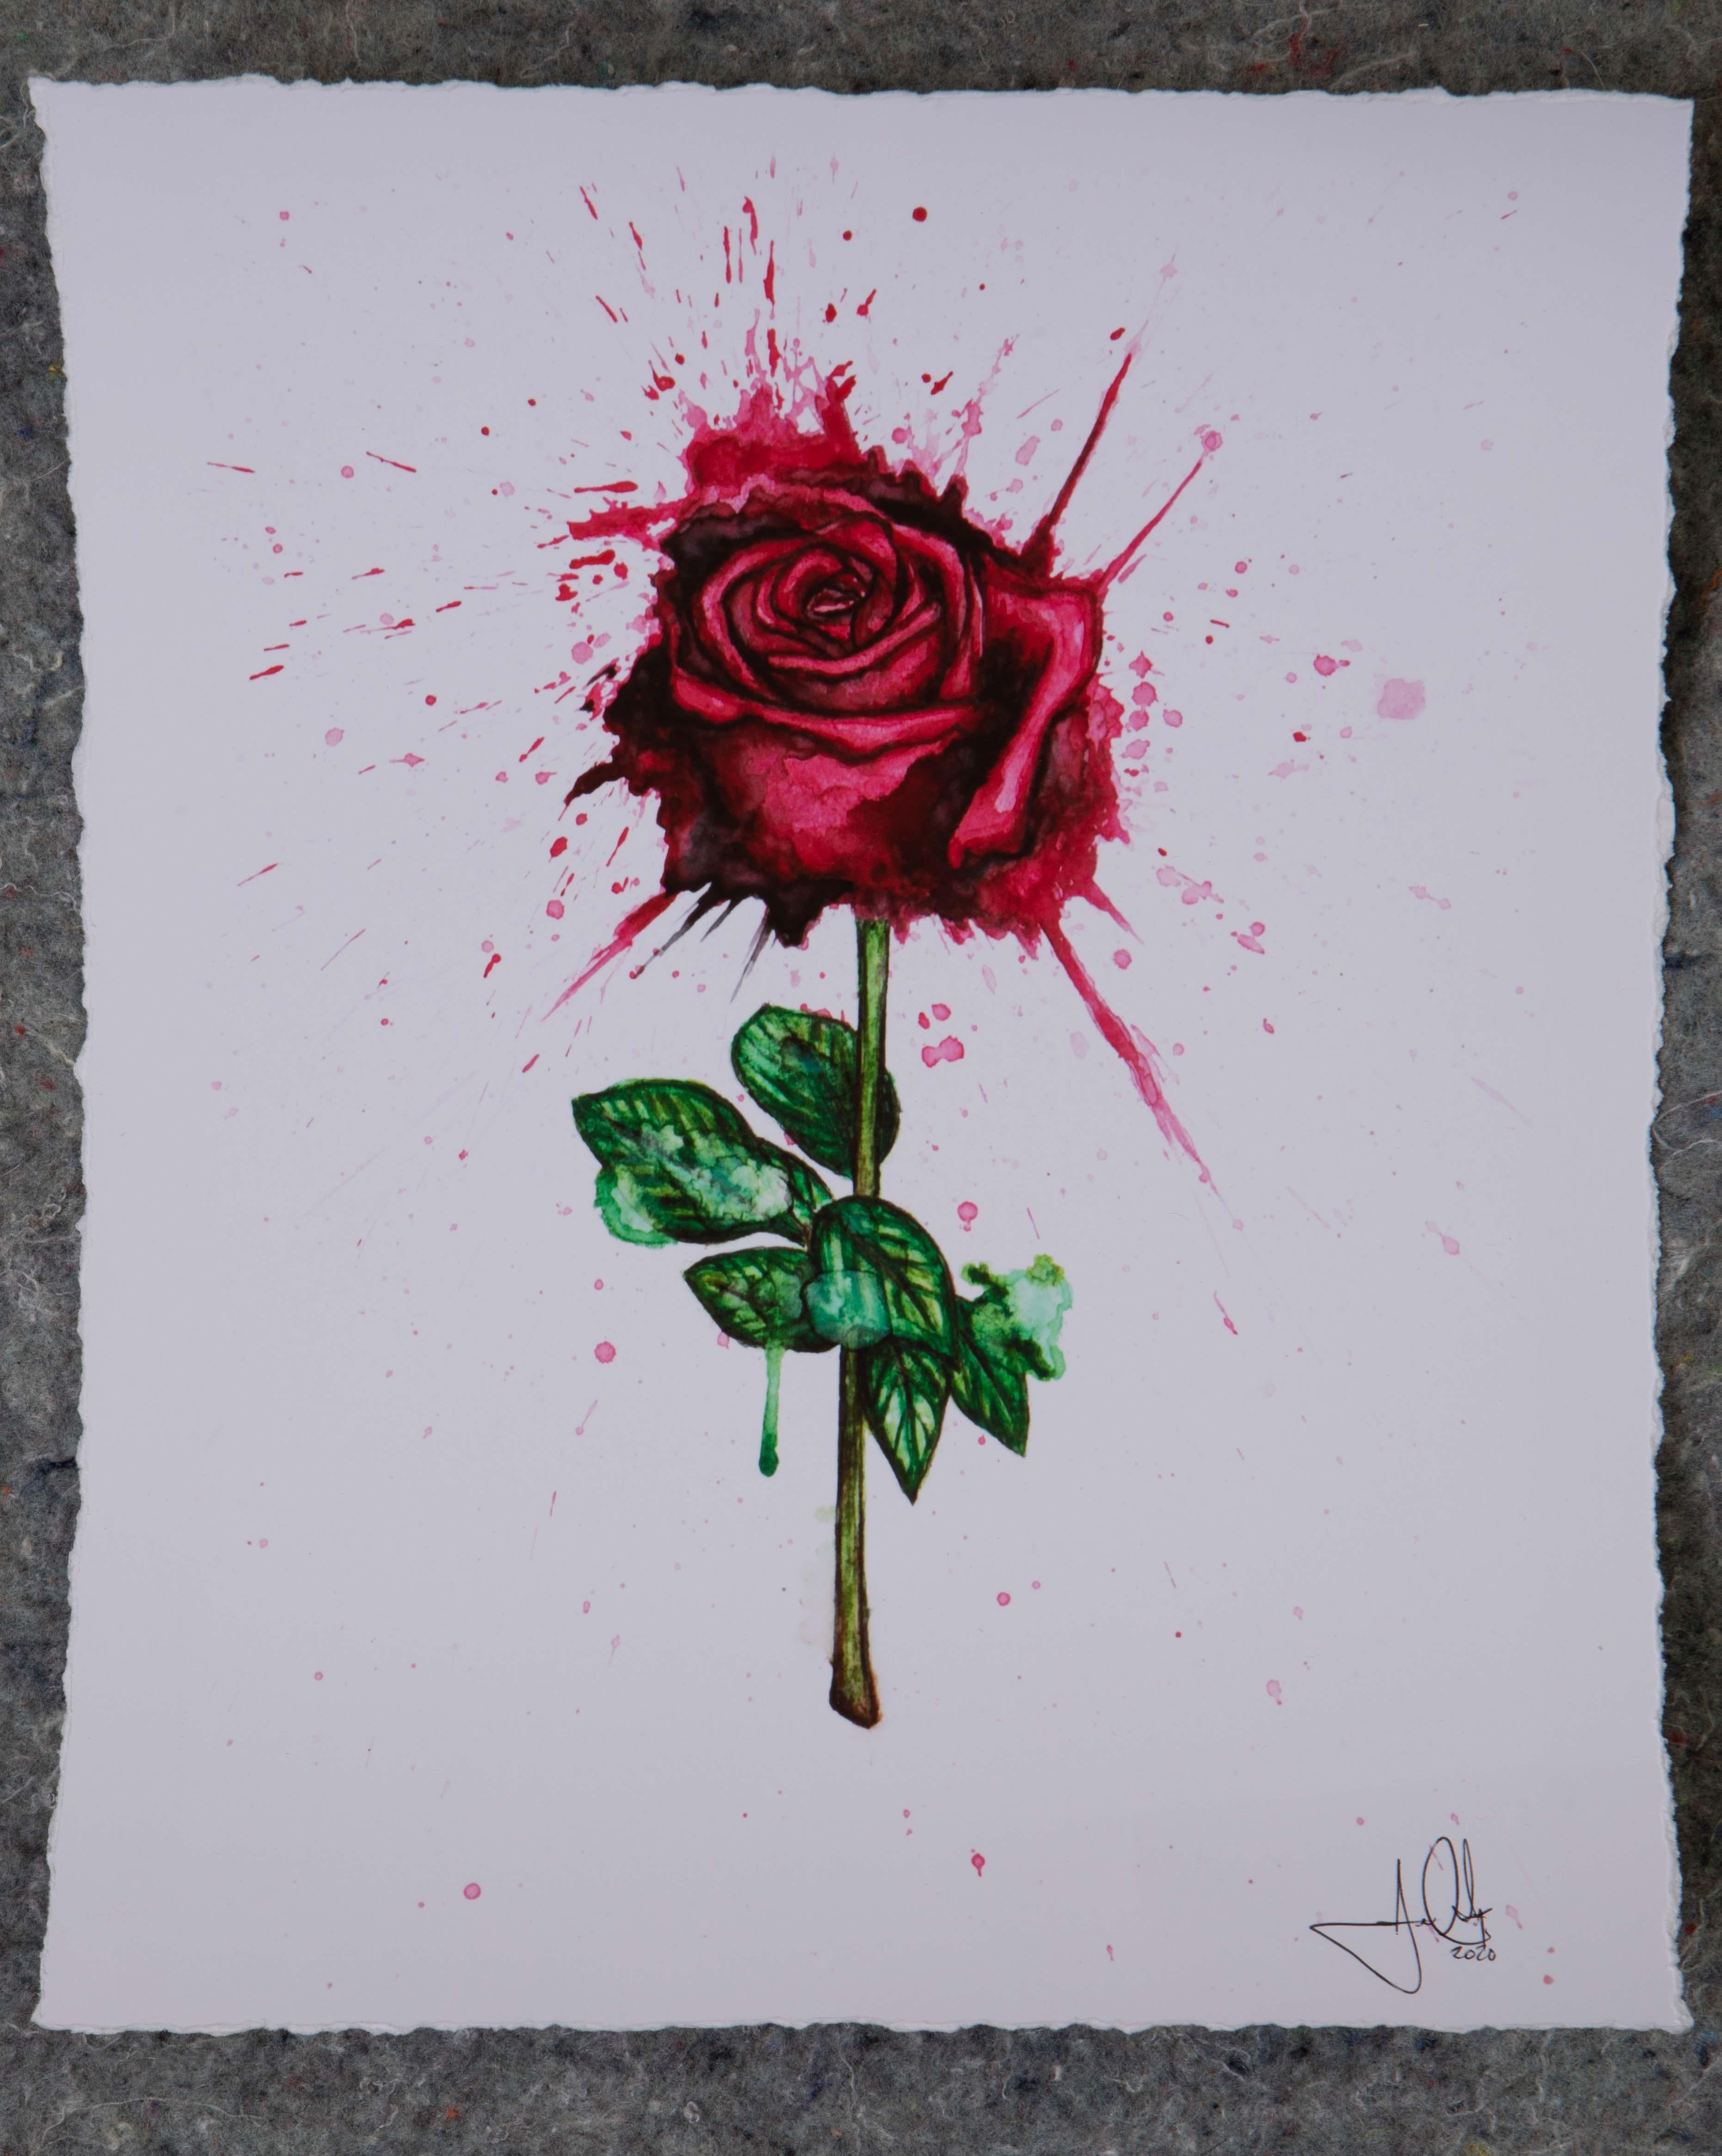 Jenna Morello Figurative Art - Splatter Painted Rose